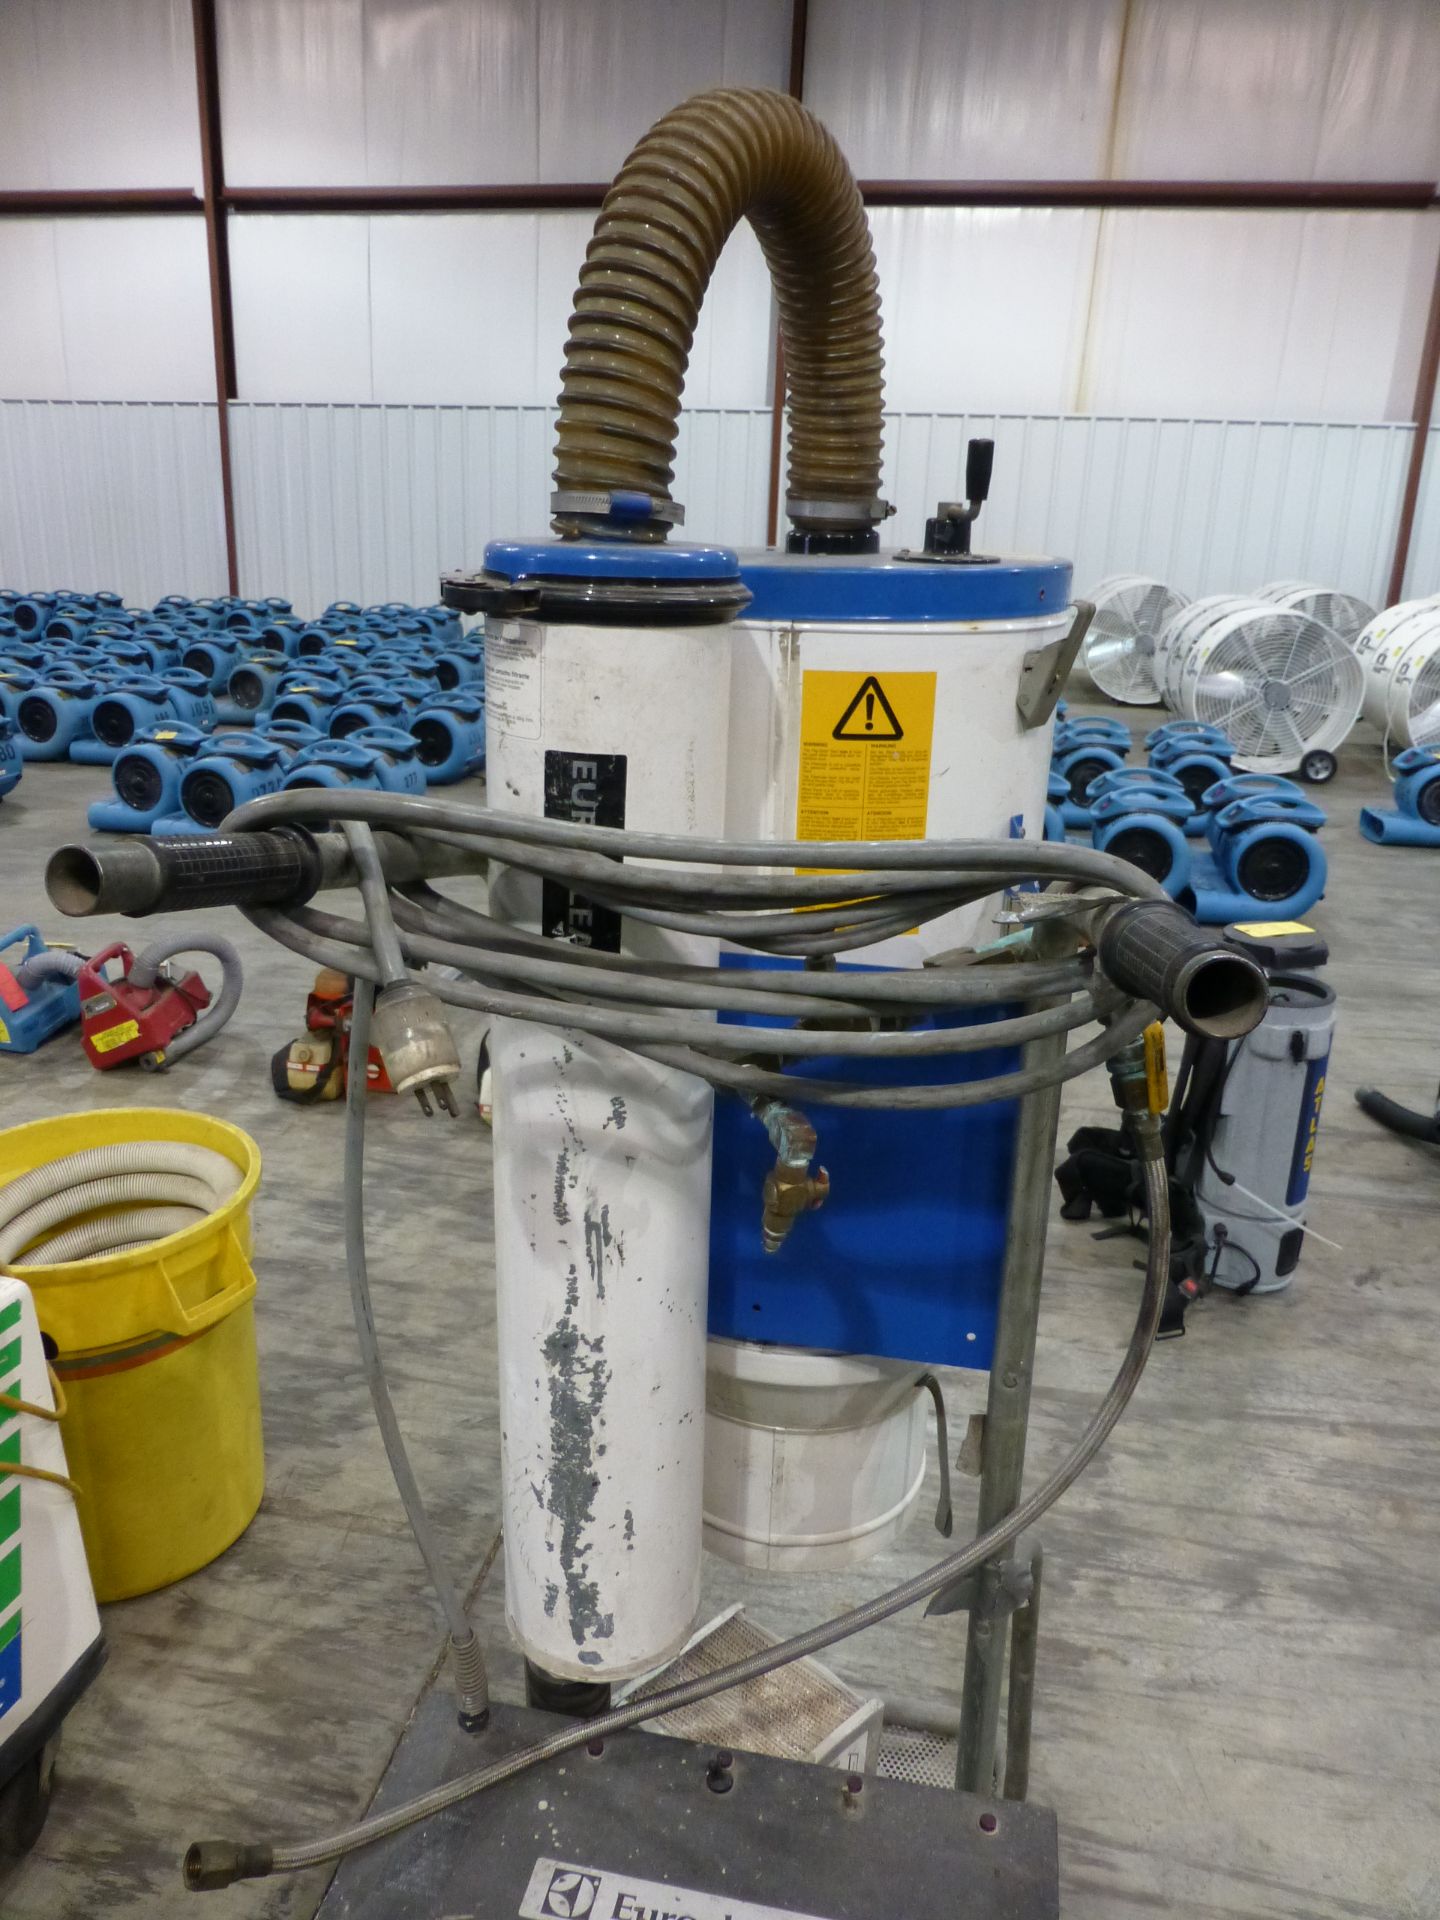 Euroclean HEPA Filtered Vacuum Cleaner|Model No. UZ 948; Serial No. 5407; 120V; 1-Phase; Lot Loading - Image 8 of 8